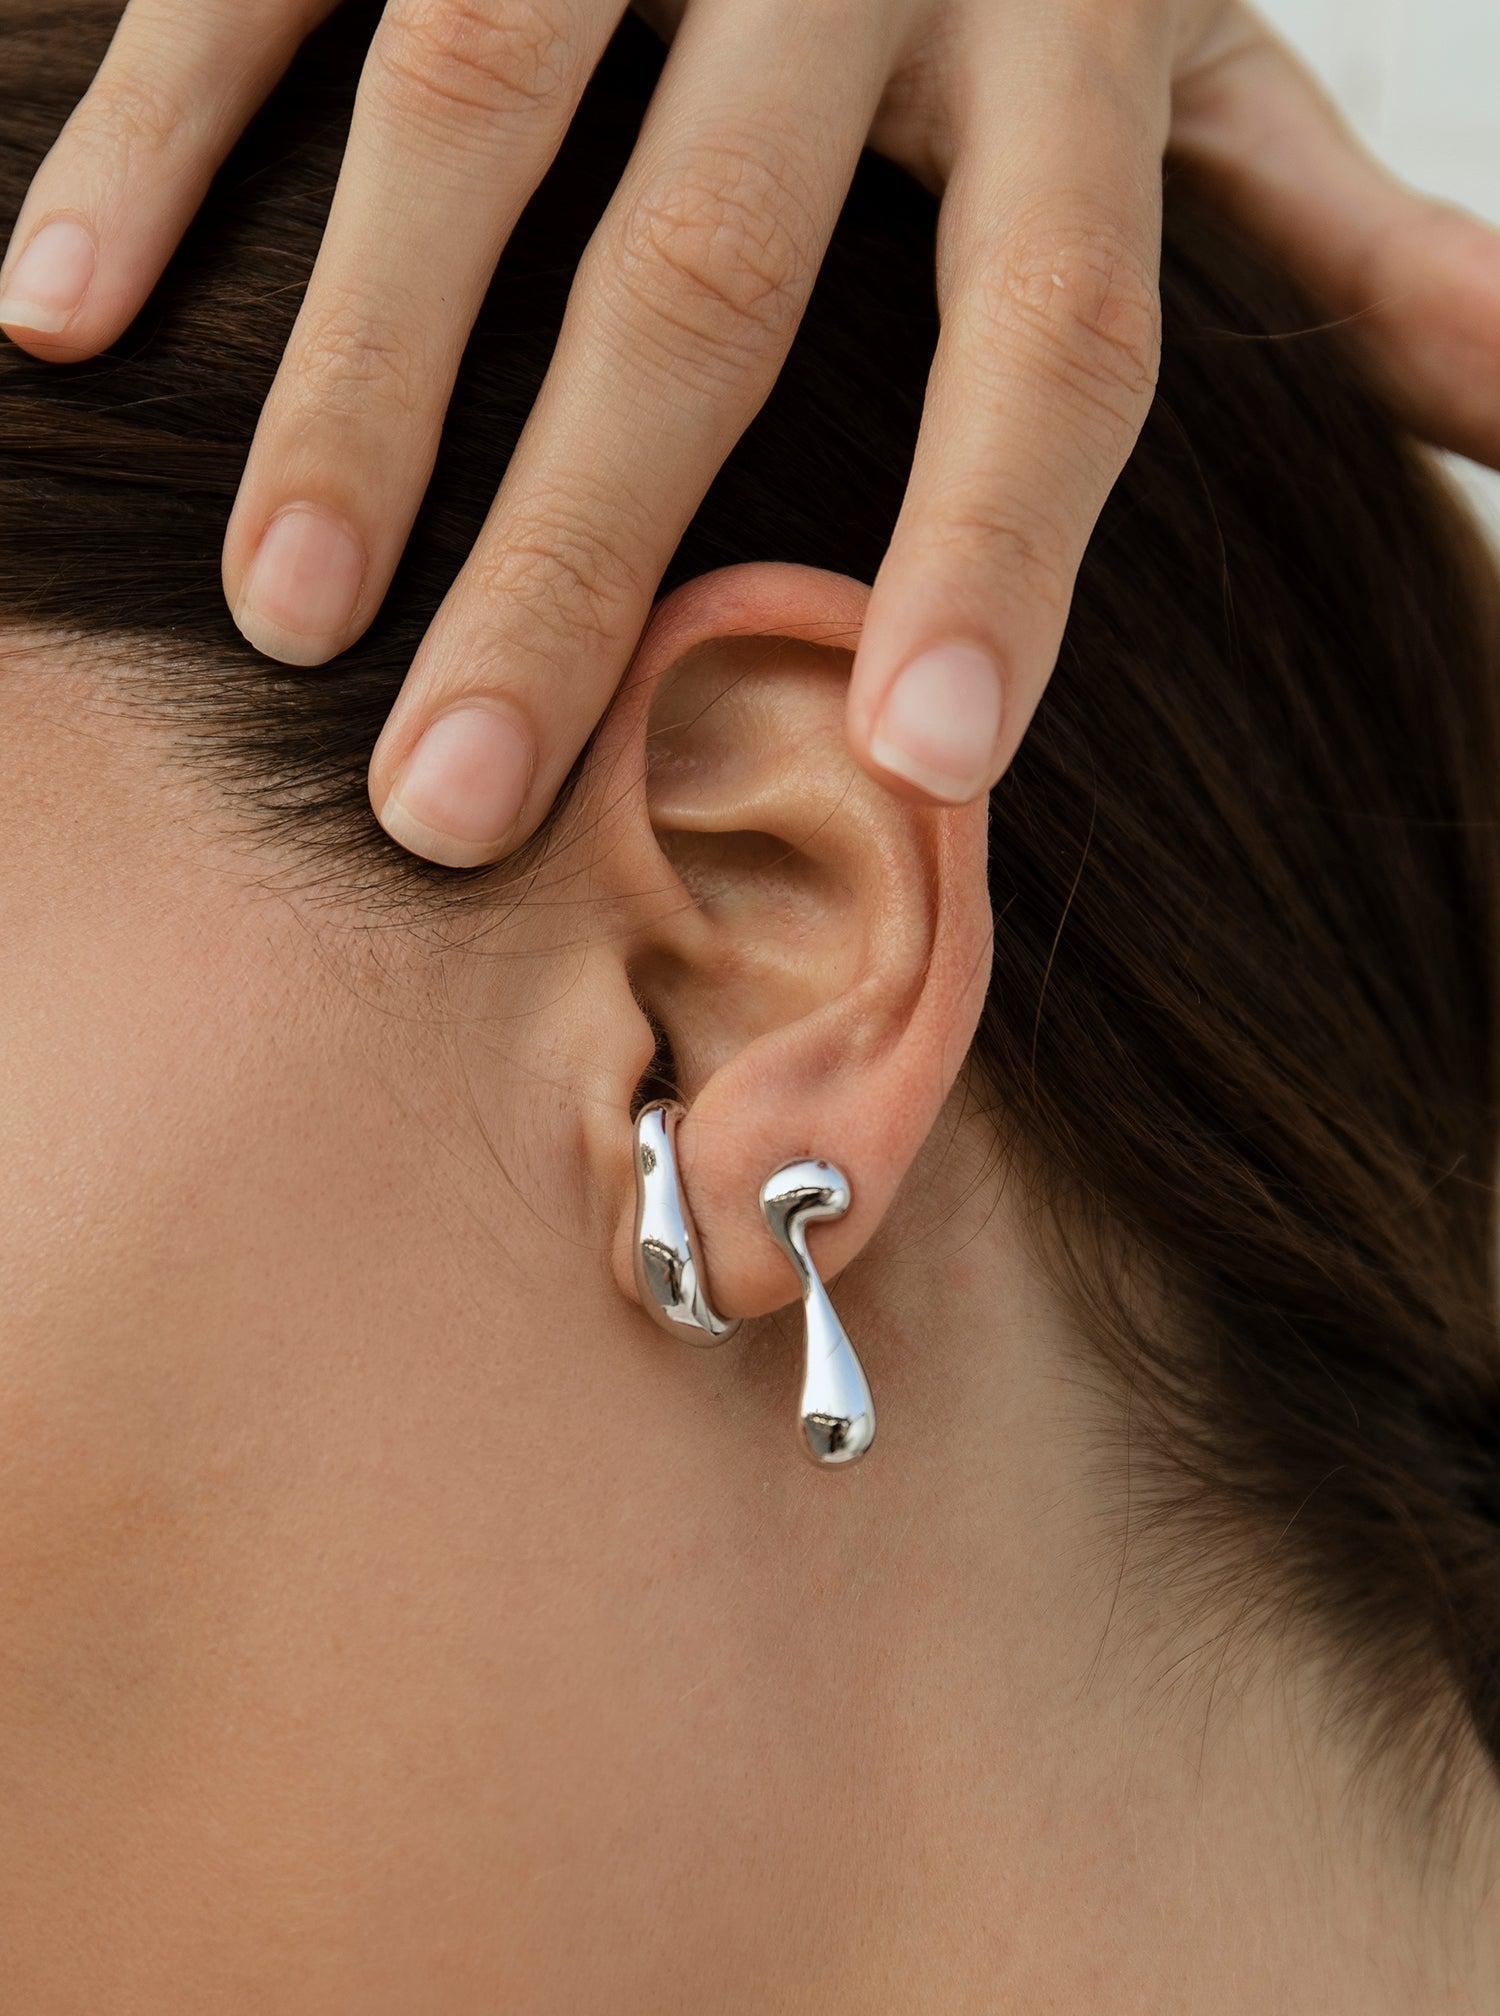 Earrings - Original earrings with liquid design antitrago support